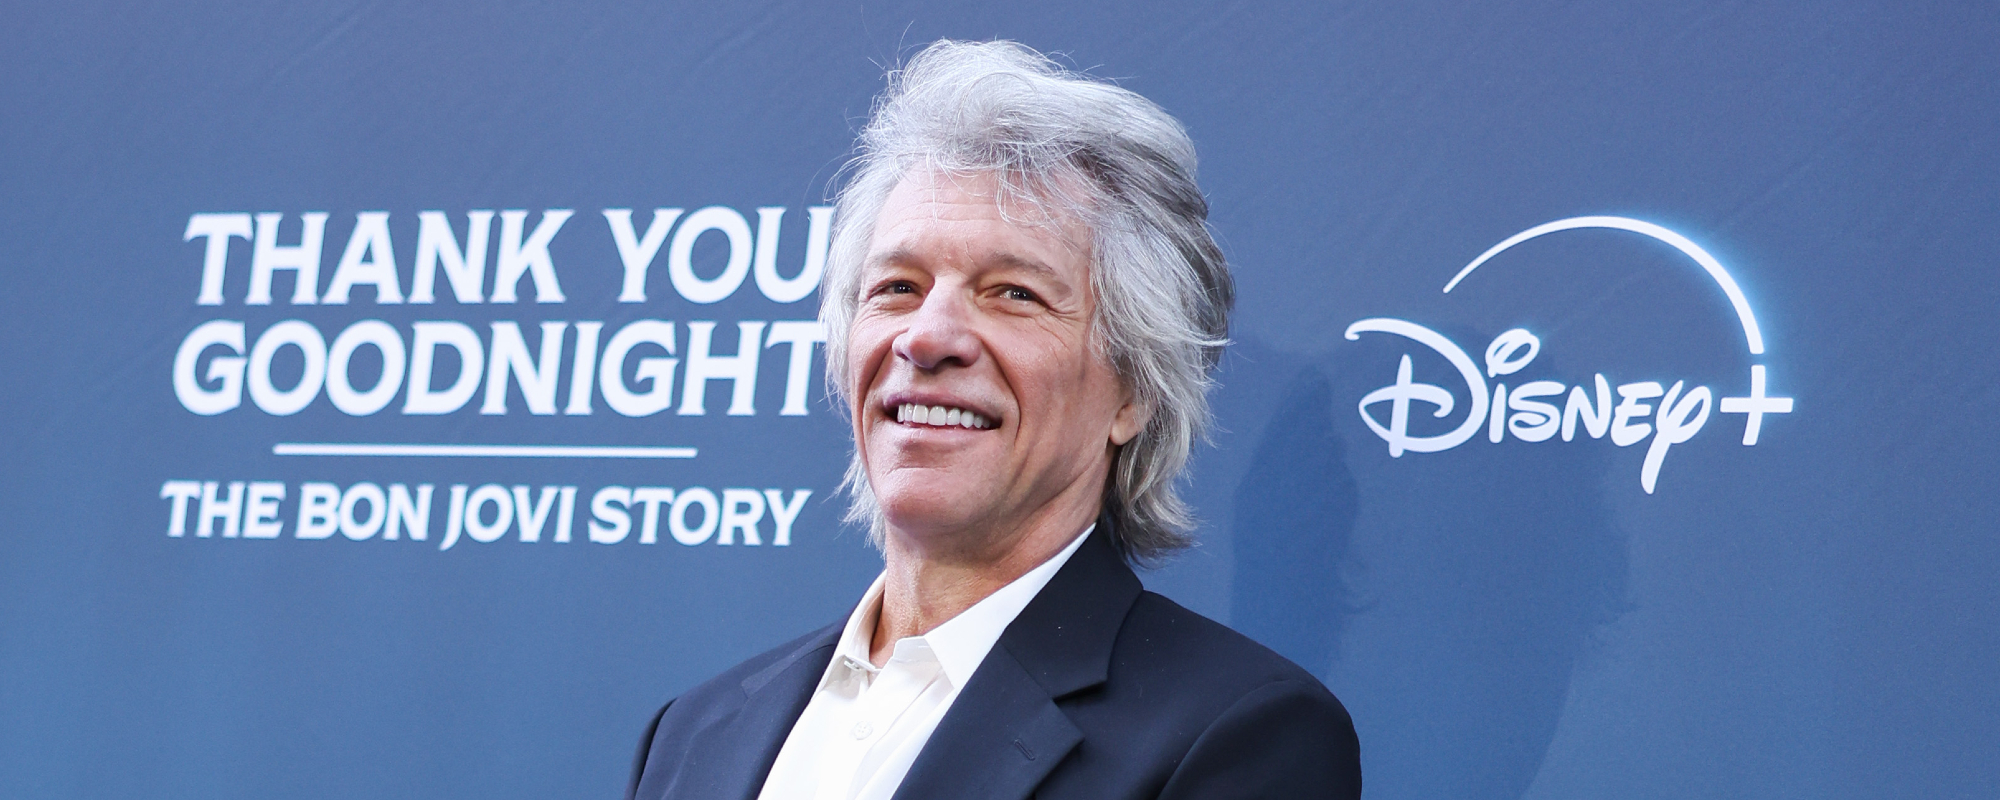 Jon Bon Jovi Admits He Wasnt a Fan of “Livin on a Prayer” When First Written [Video]